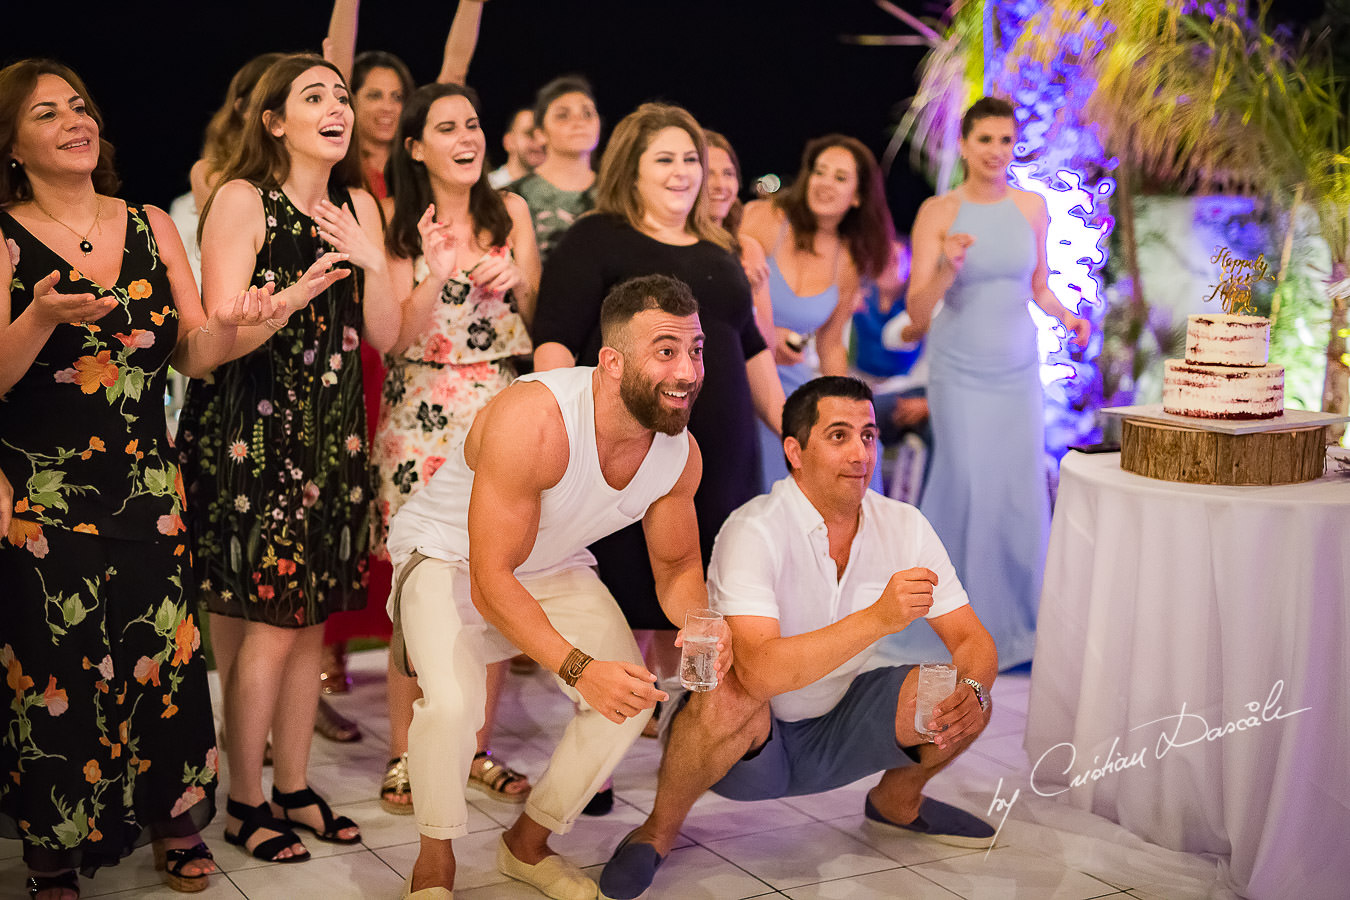 Wedding Photography at Lebay Hotel in Larnaca by Cyprus Wedding Photographer Cristian Dascalu.